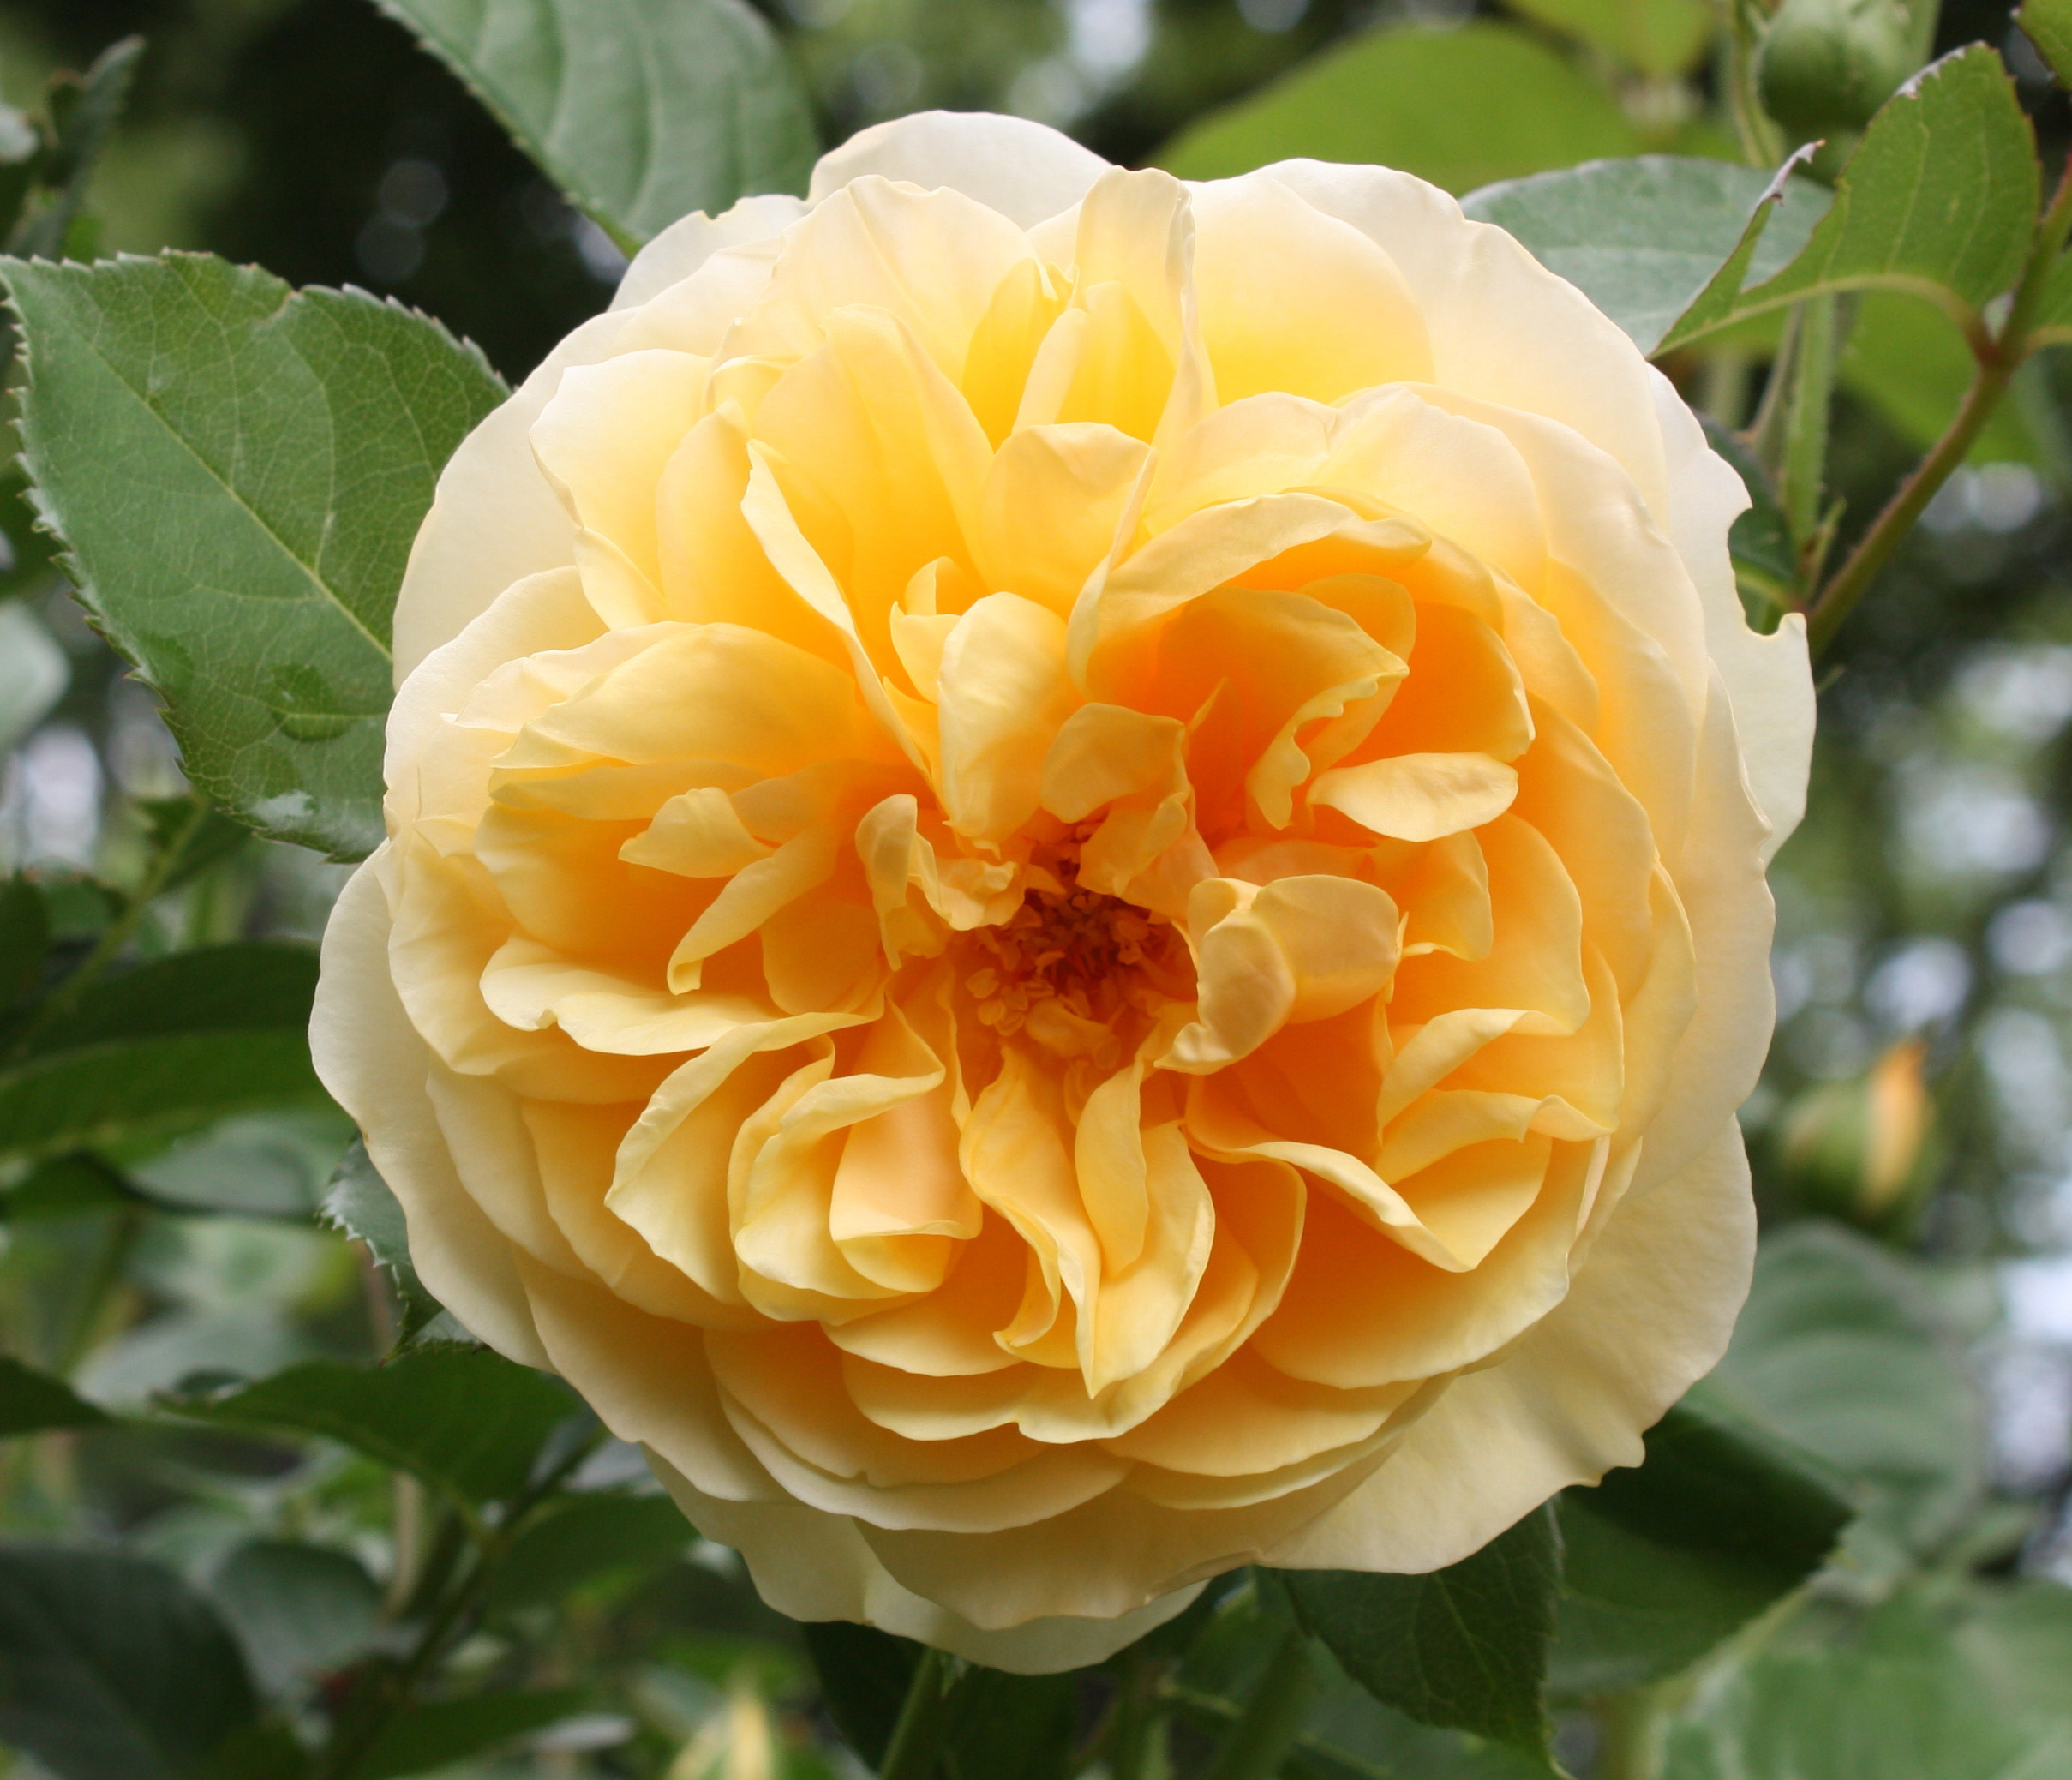 Lichfield Angel rose | The Rose Journal
